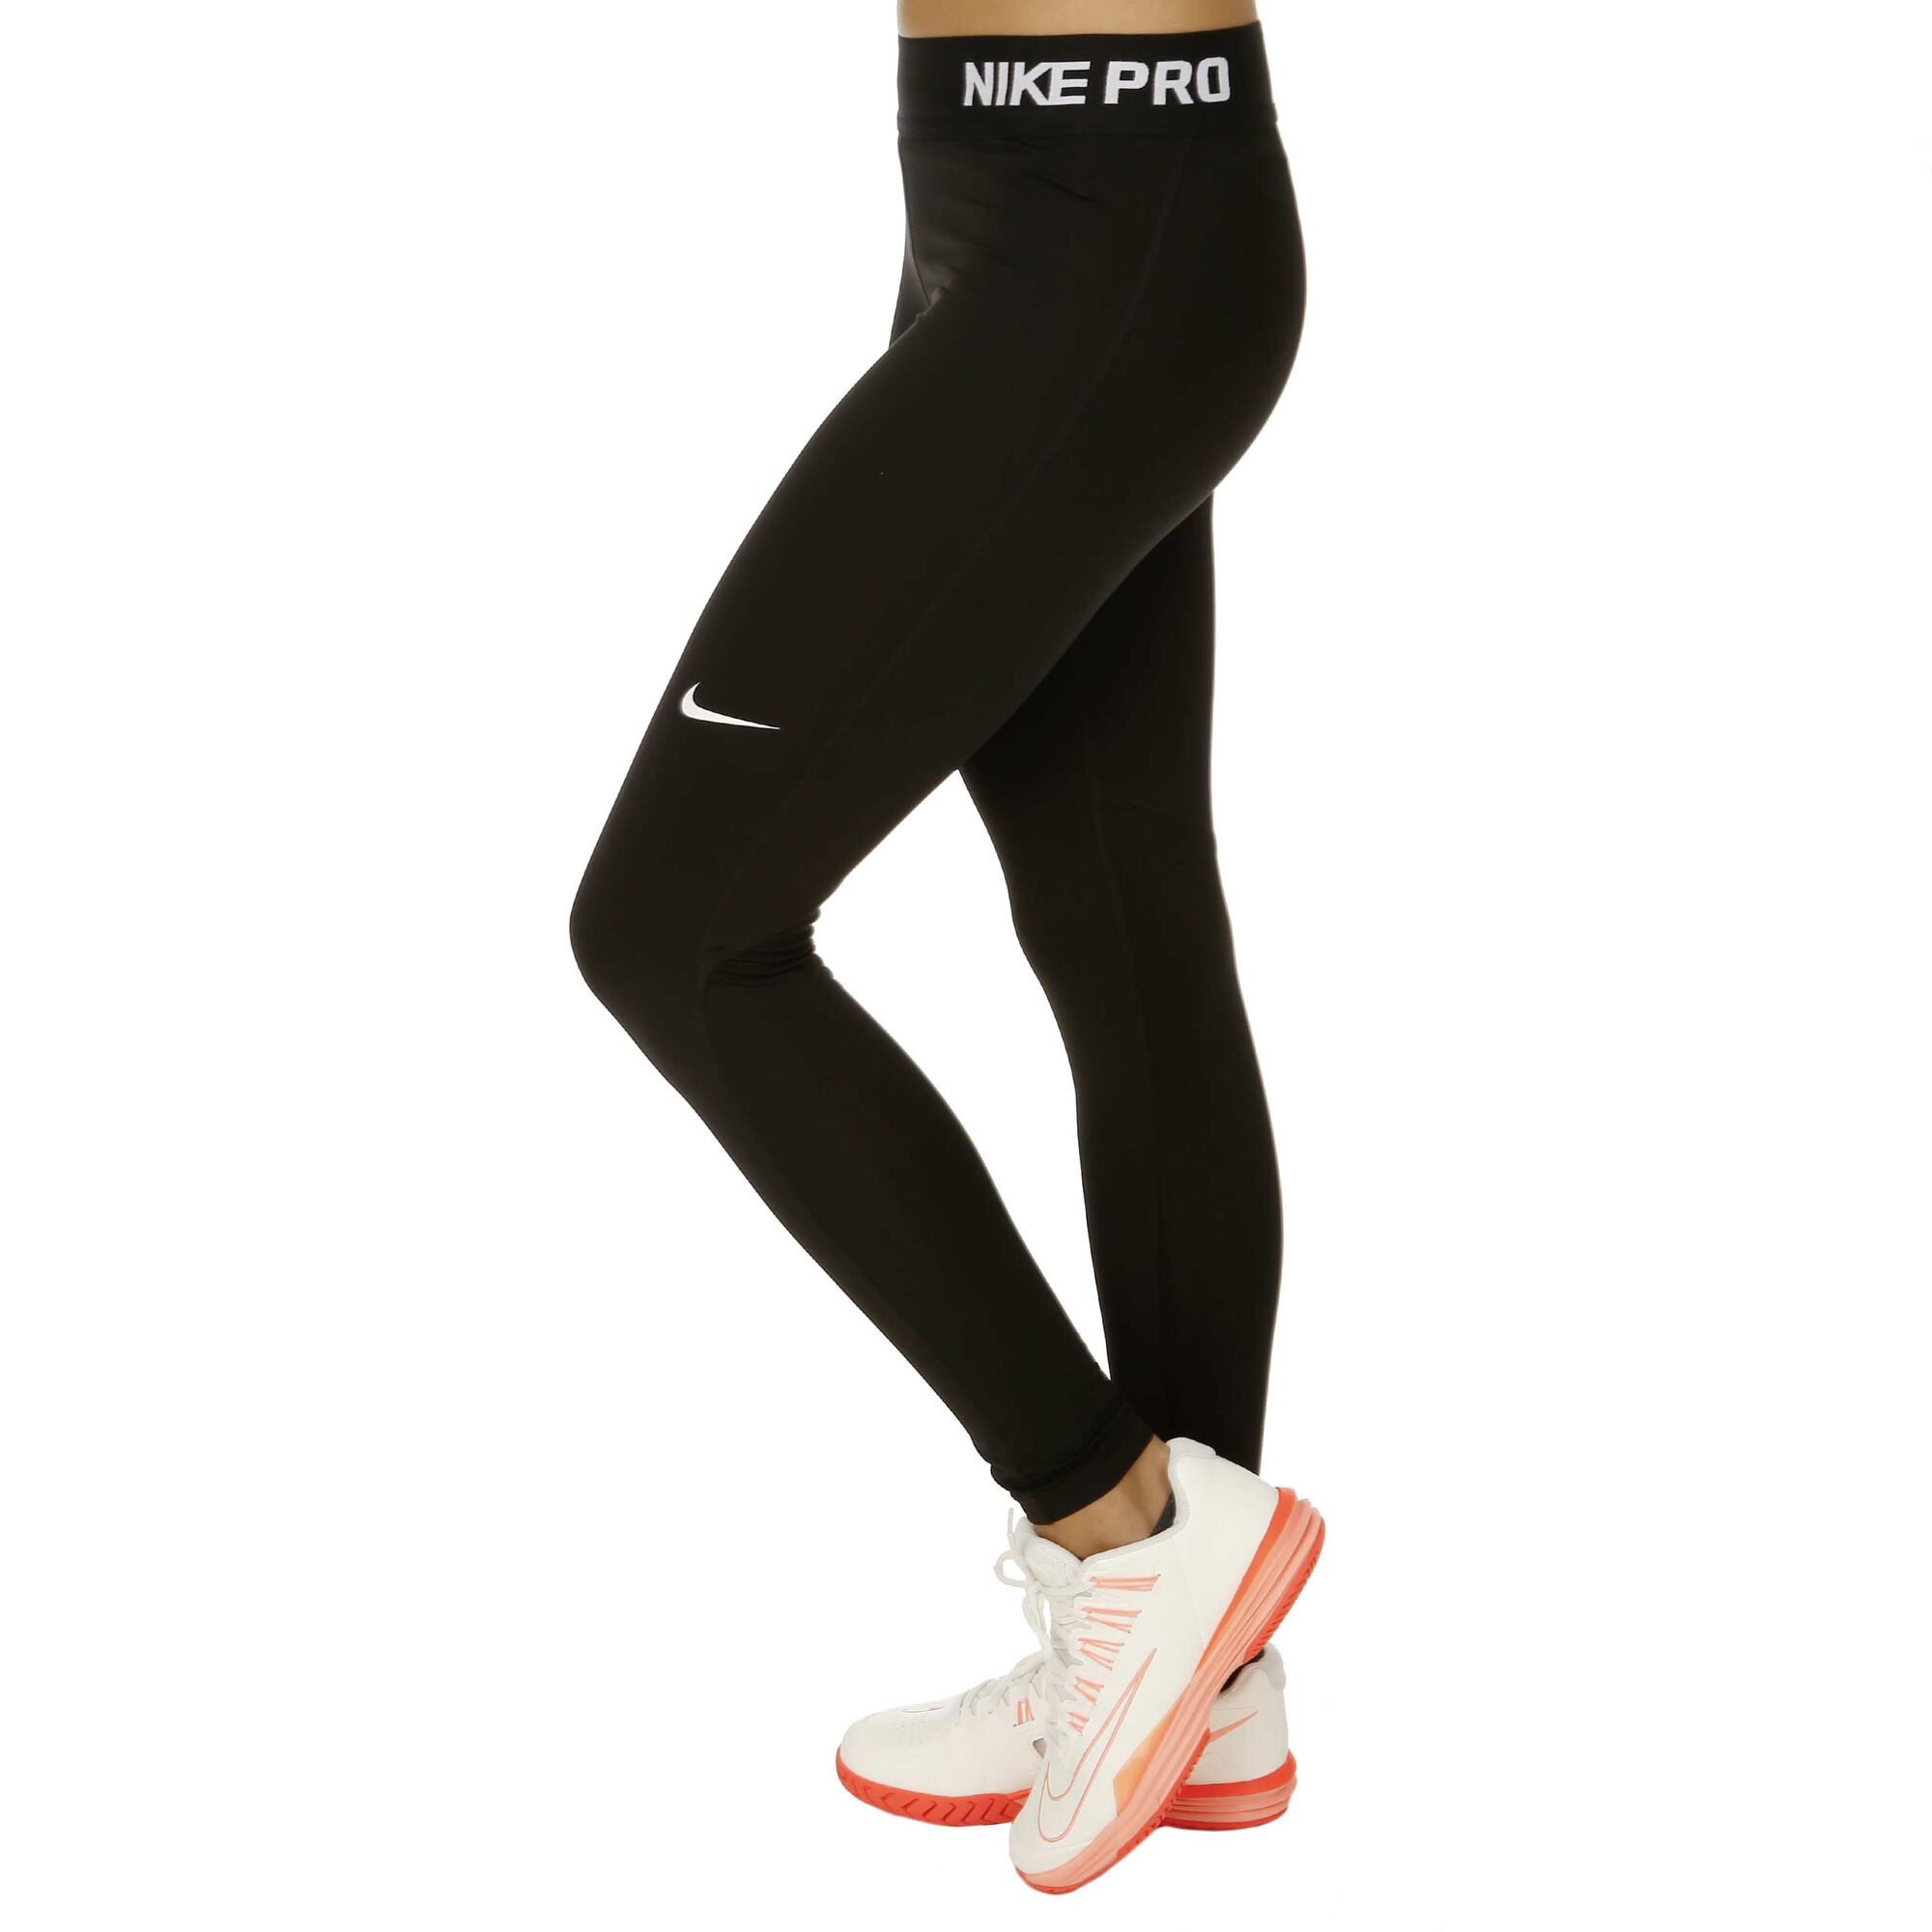 verraden vliegtuigen Tapijt Nike Pro Cool Tight Dames - Zwart, Wit online kopen | Tennis-Point